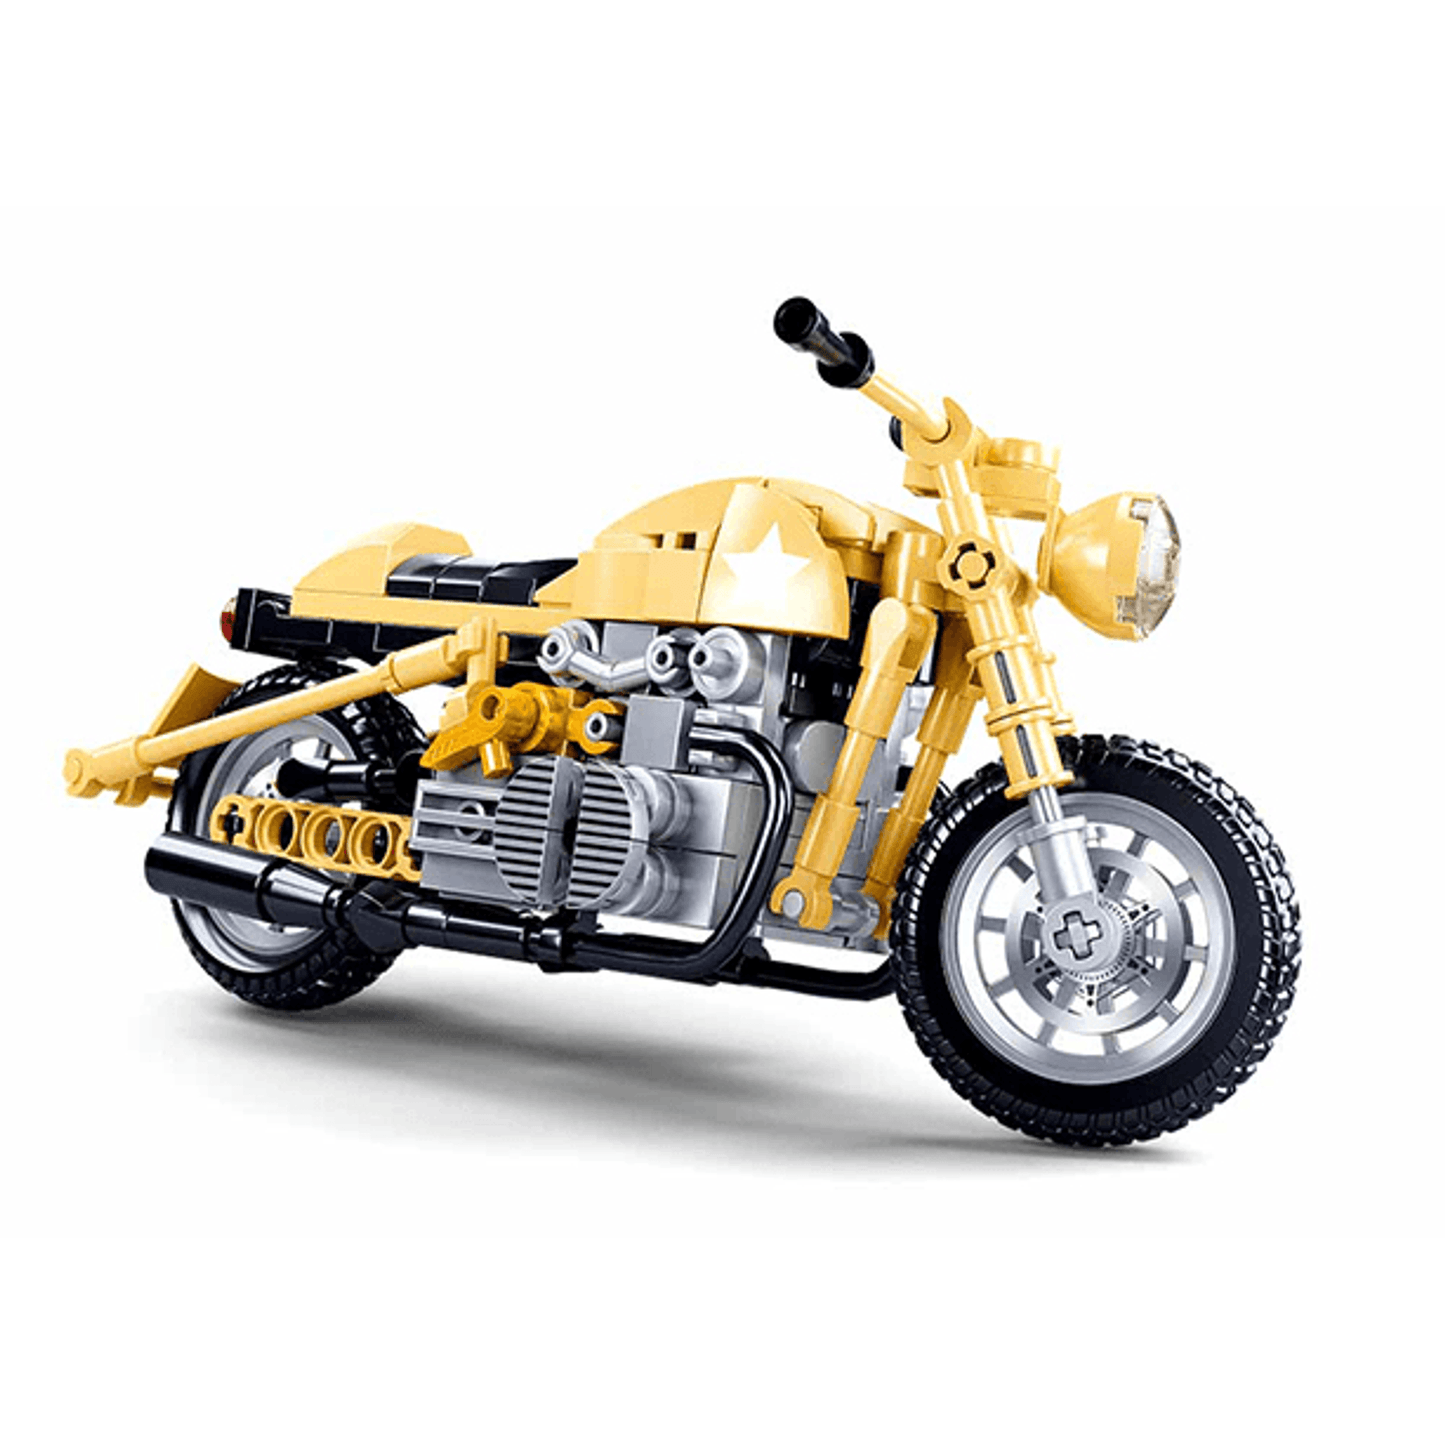 Sluban R75 Army Motorcycle 223pcs - Toybox Tales